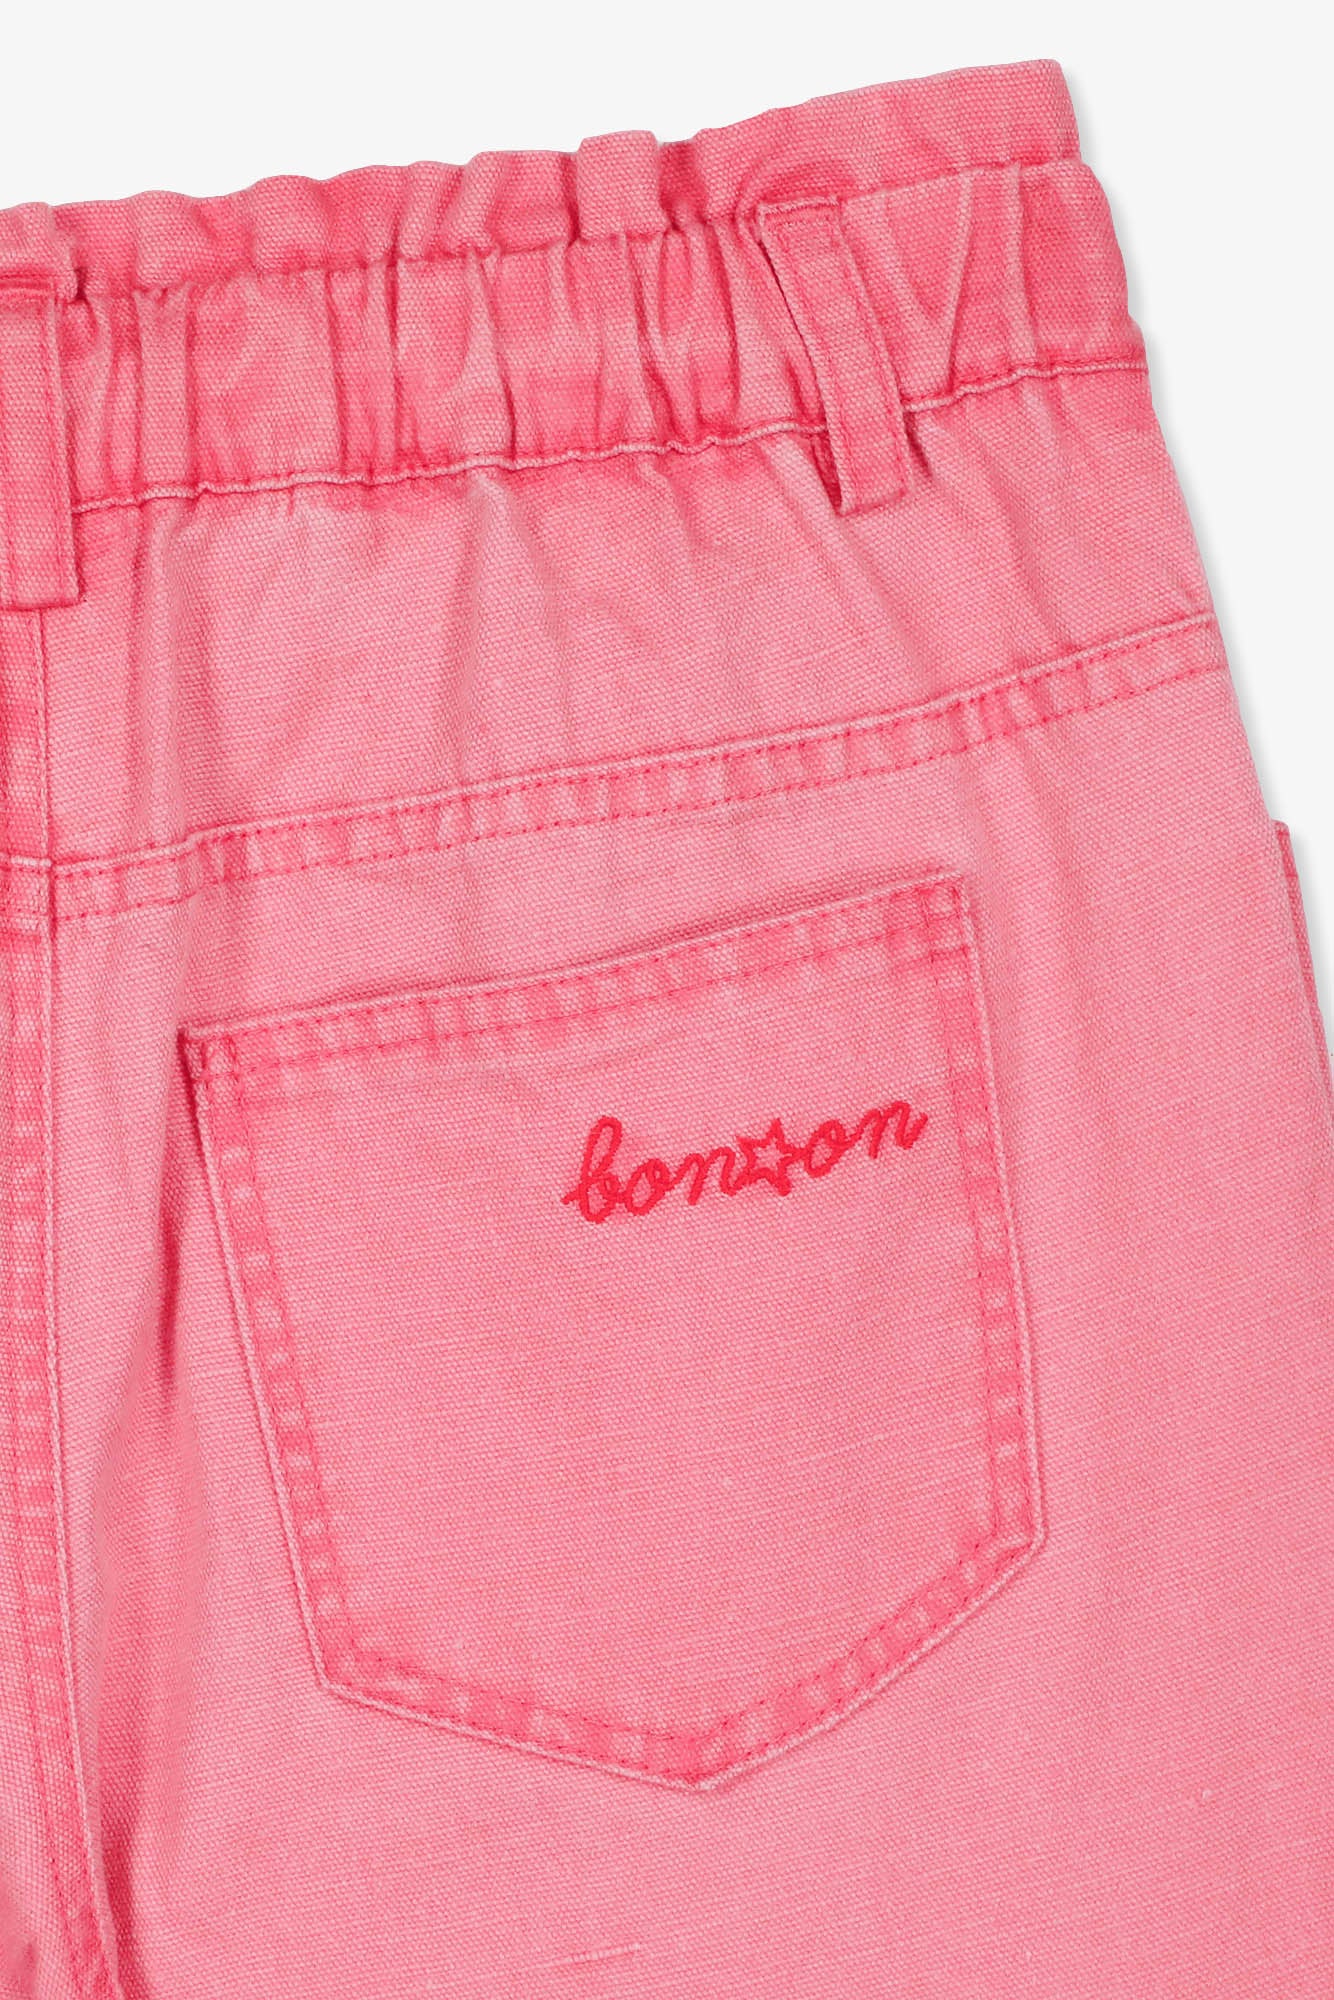 Pantalon - Domino rose toile coton et lin